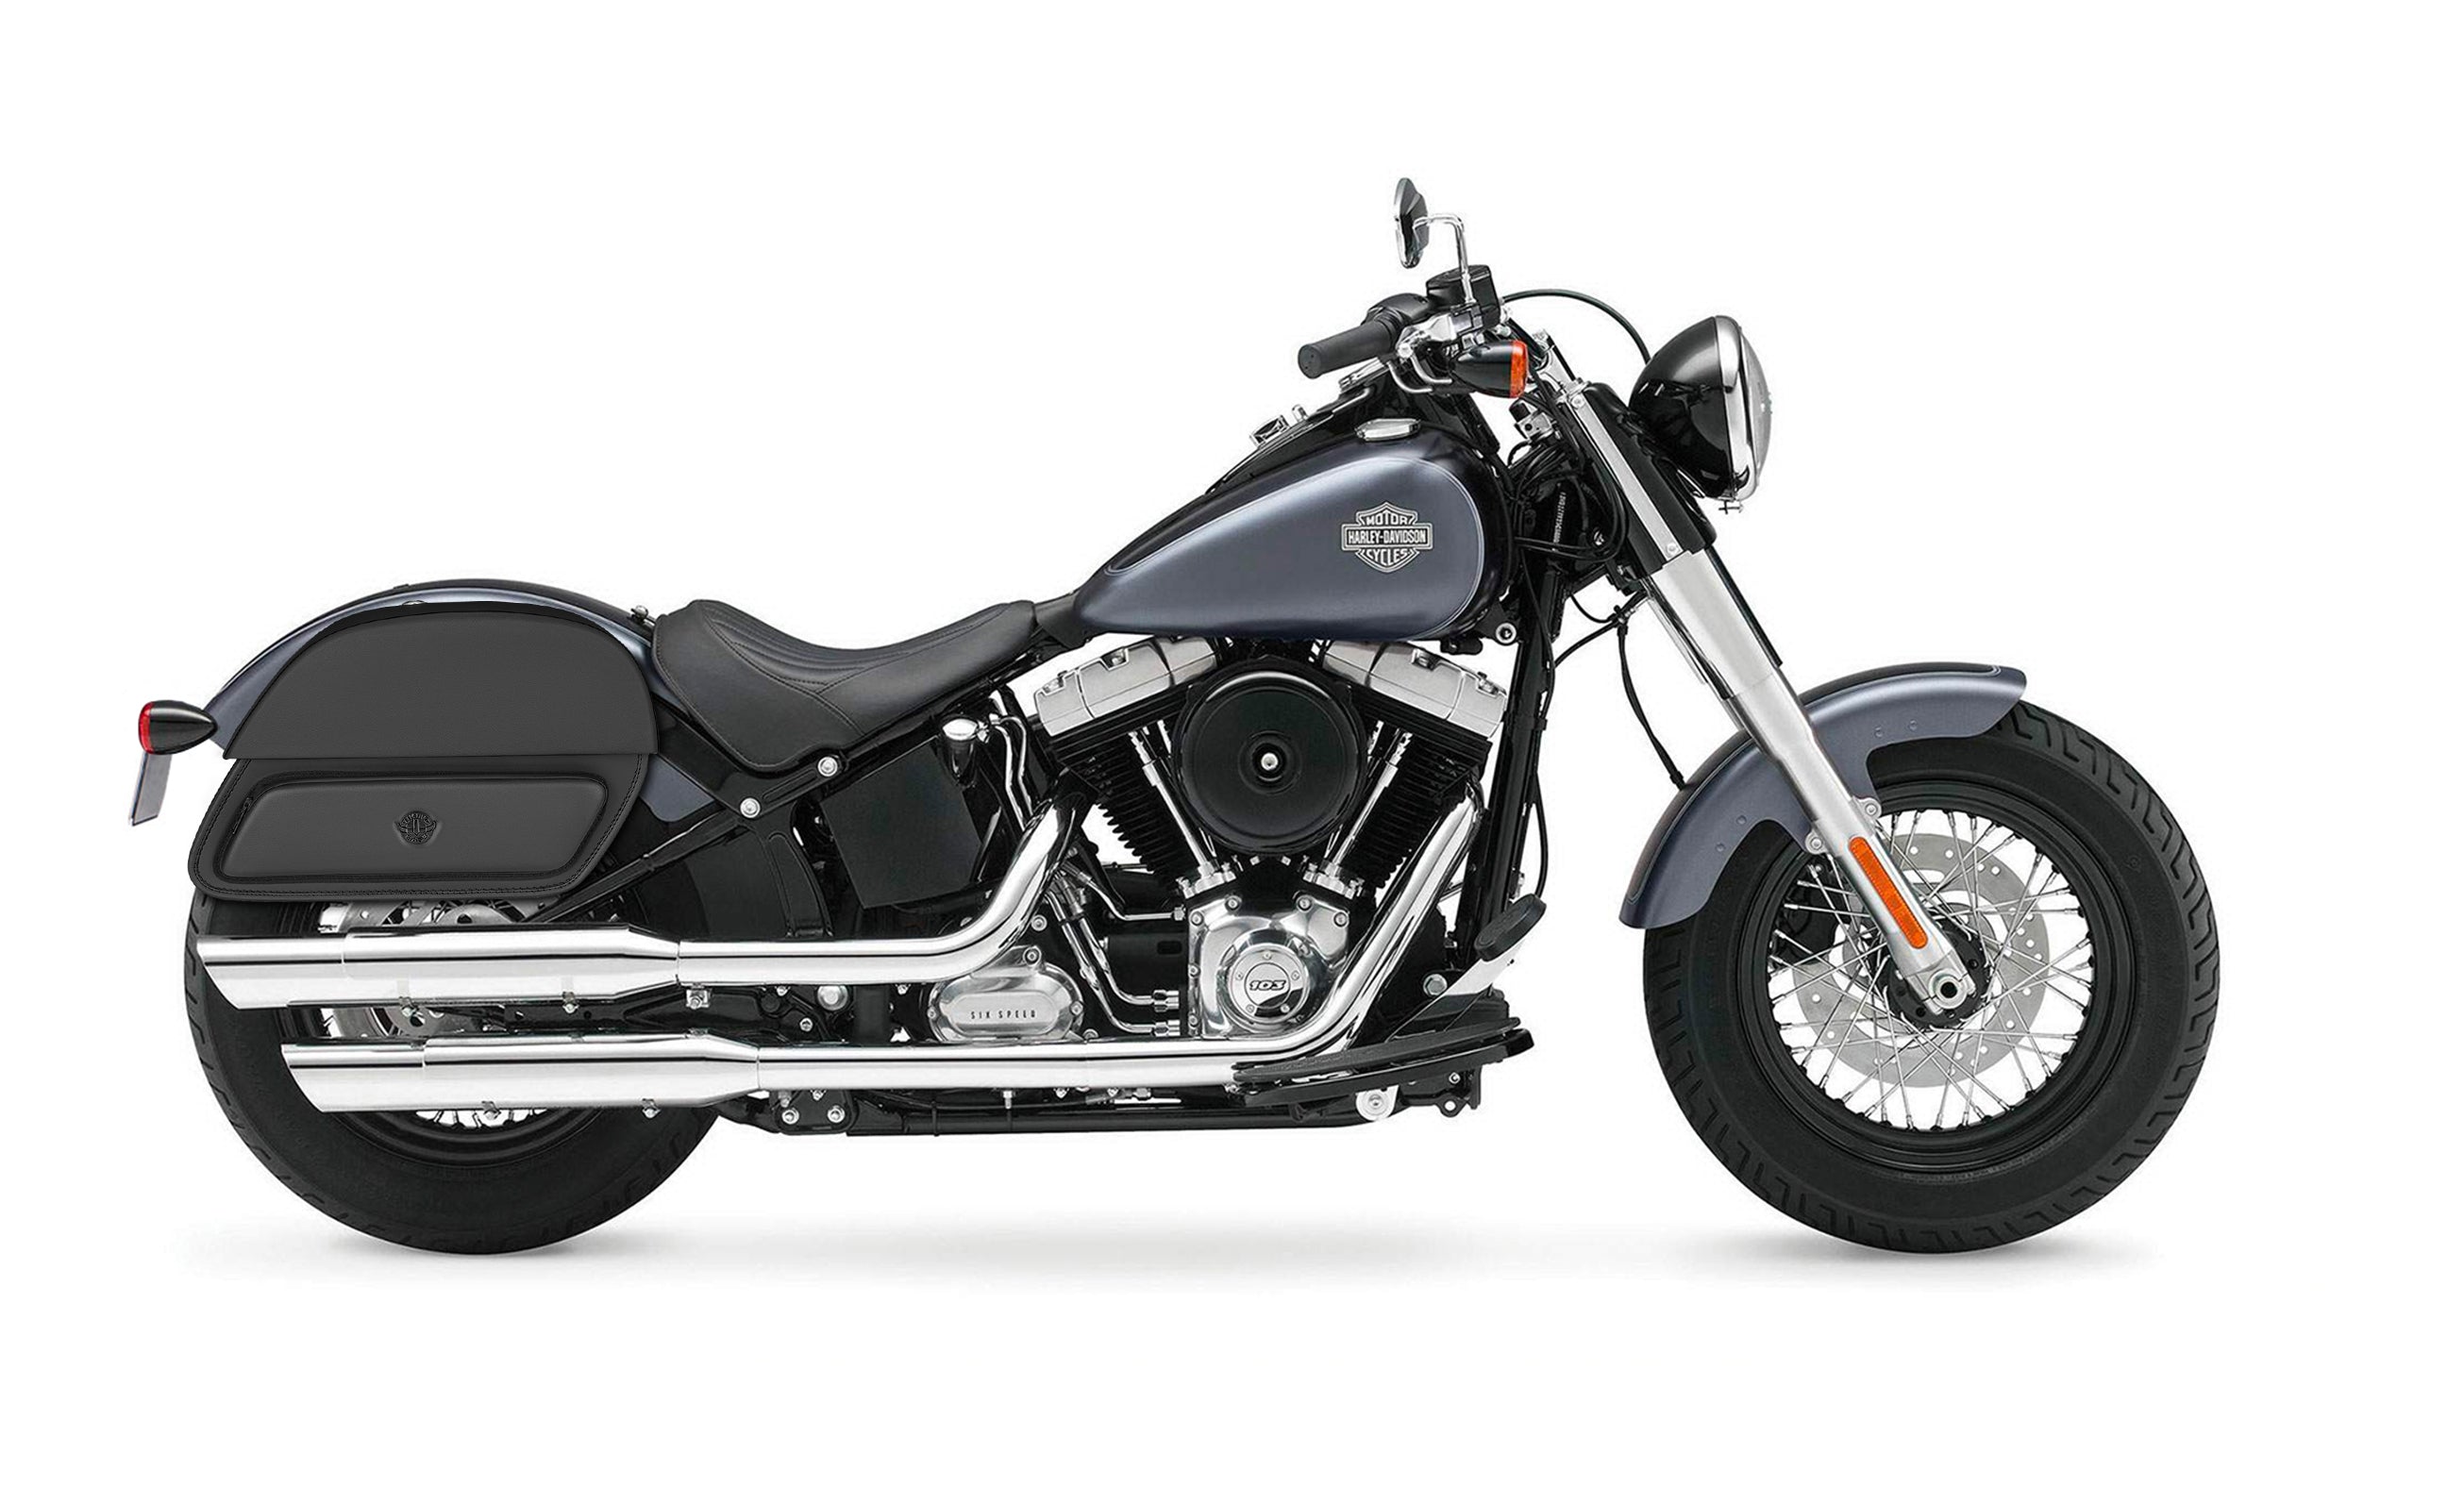 28L - Pantheon Medium Motorcycle Saddlebags for Harley Softail Slim FLS on Bike Photo @expand